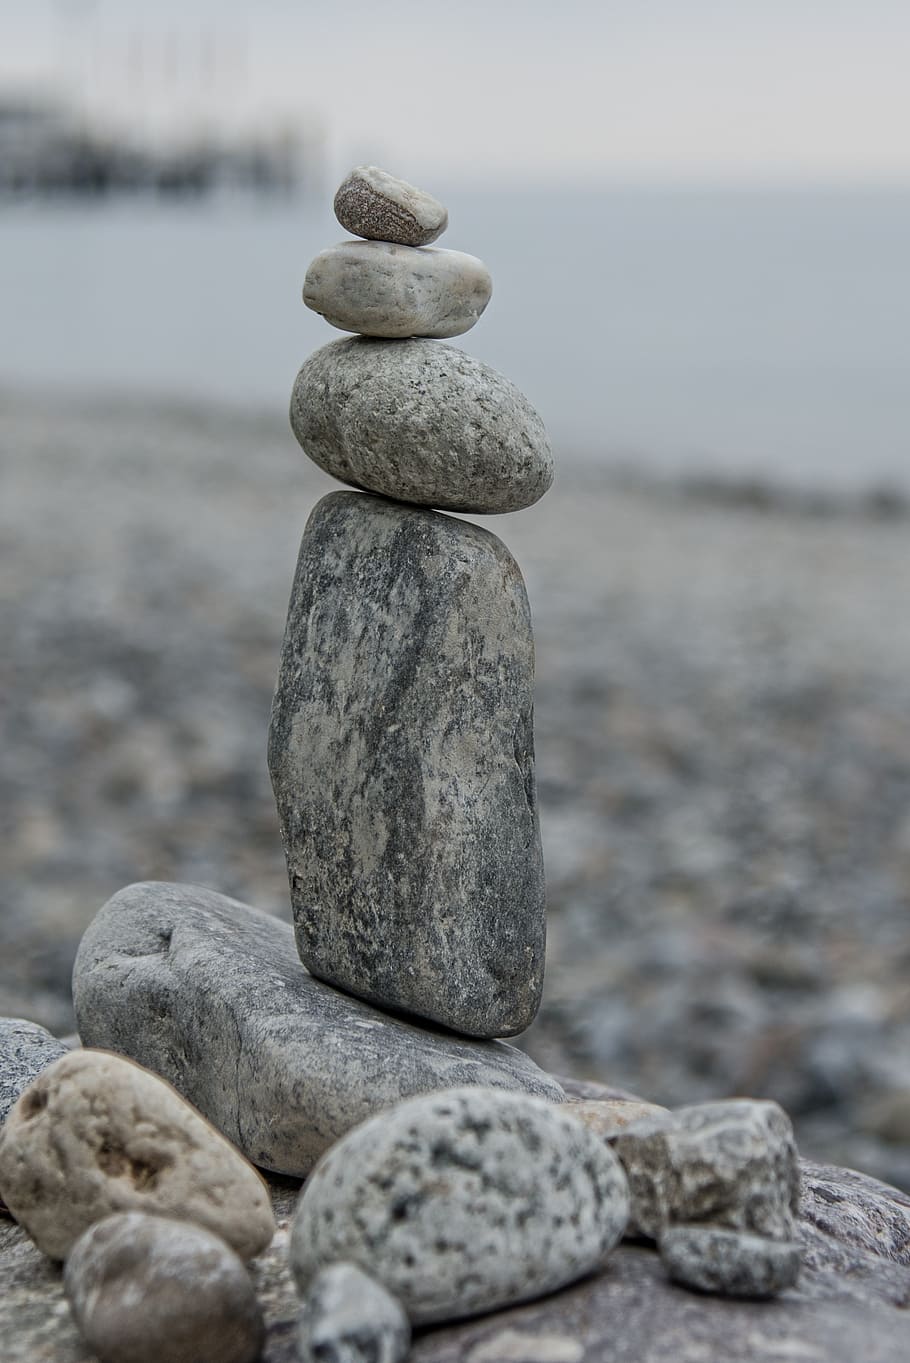 gray, balance stone, body, water, stones, sculpture, statue, figure, stone sculpture, stone figure